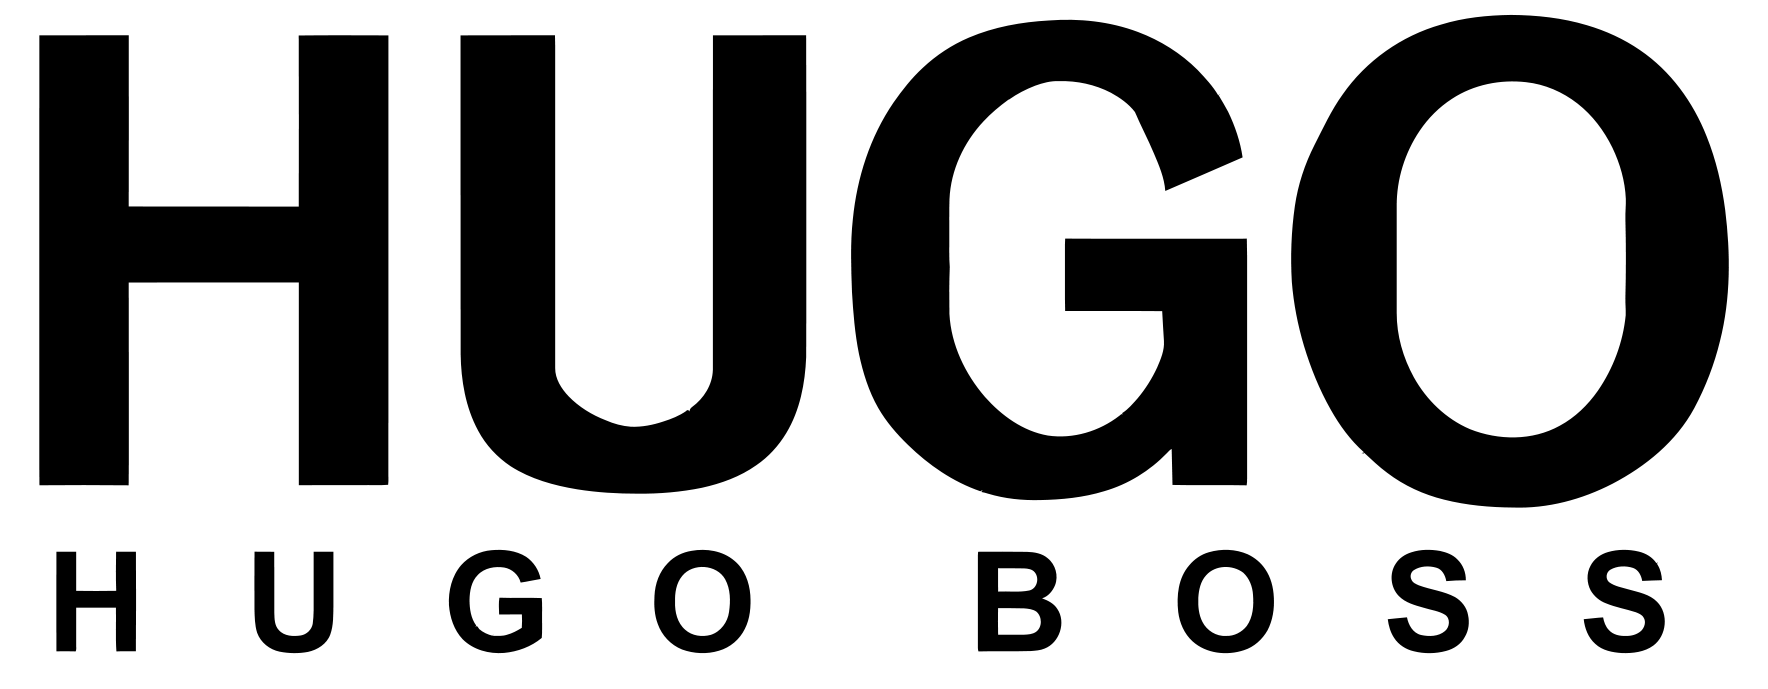 Hugo Boss logo png transparen